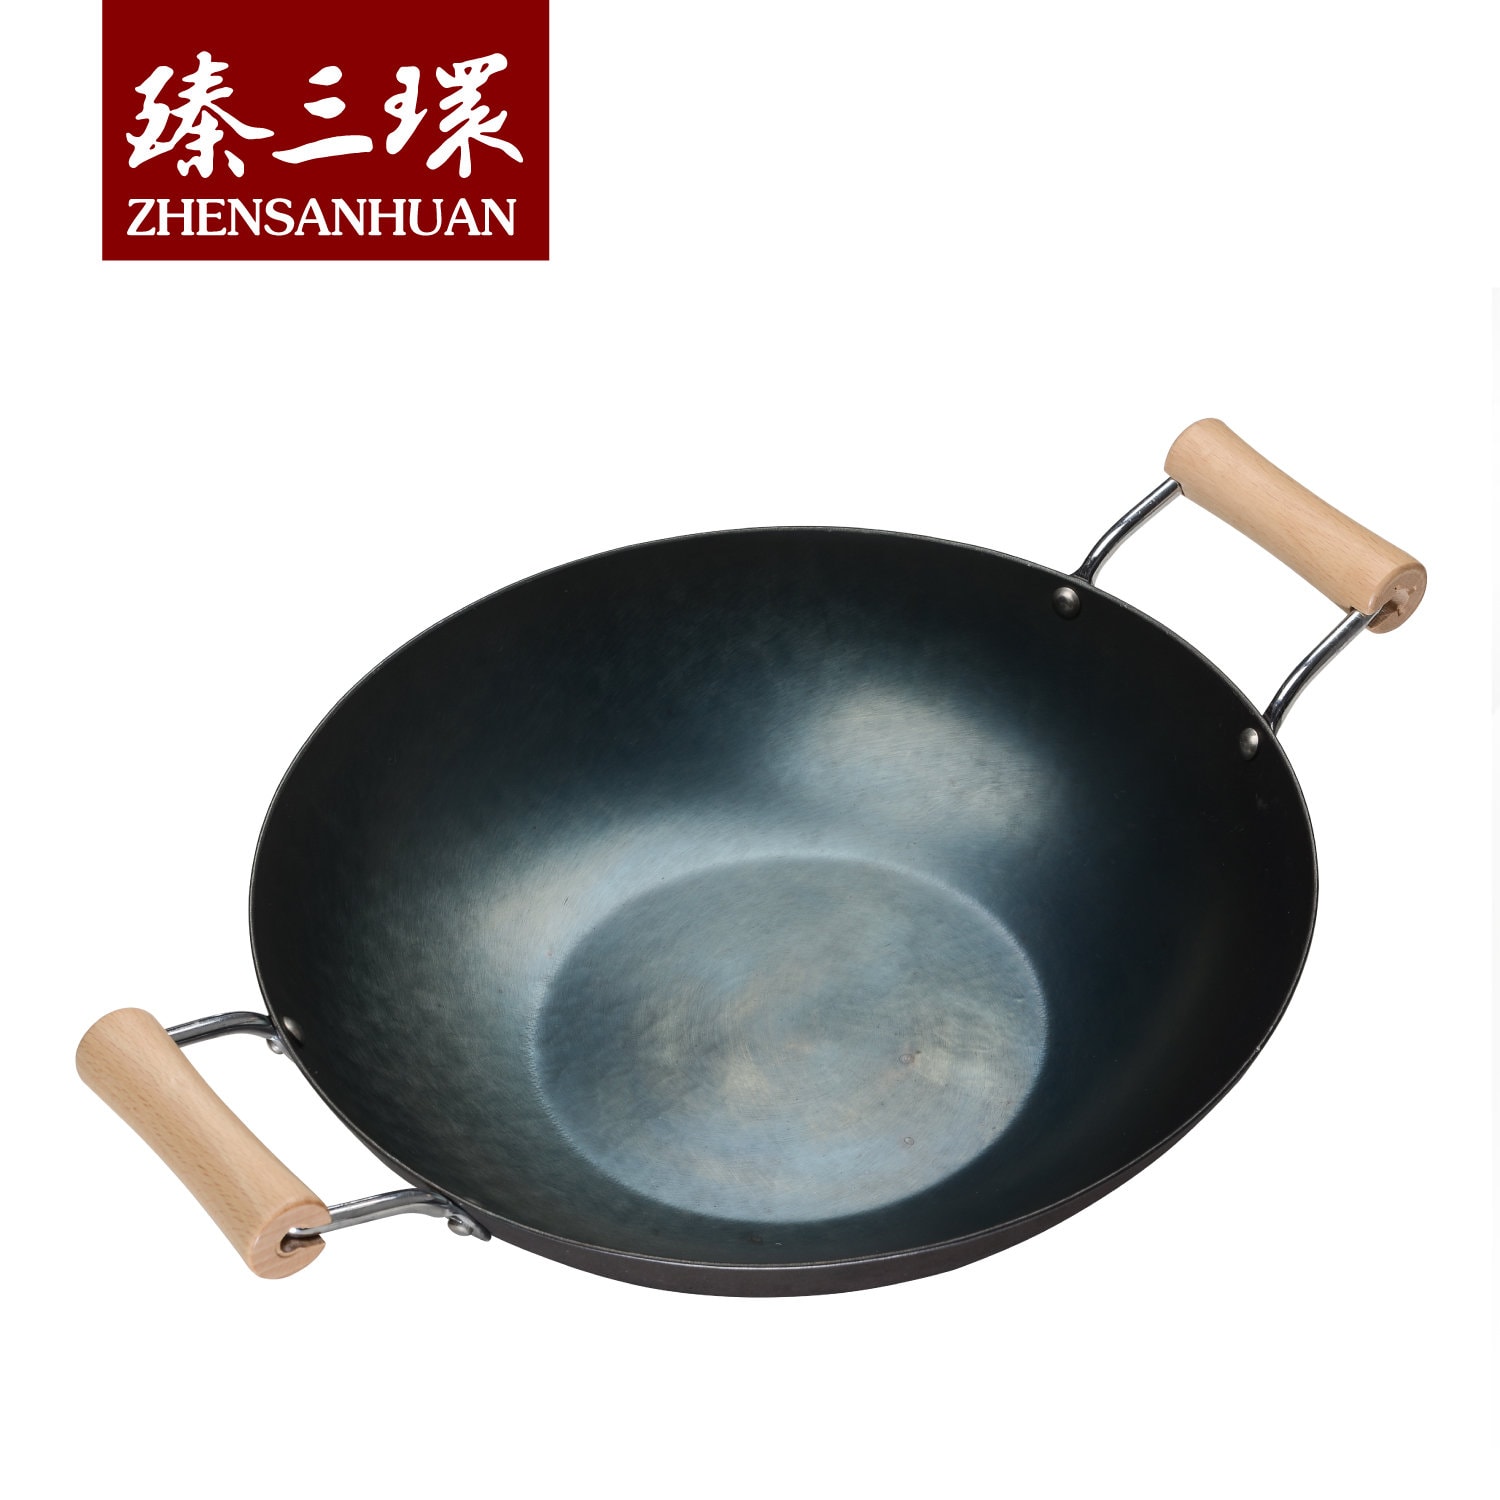 Zhensanhuan Chinese Traditional, Hand Hammered Iron Woks, Stir Fry Pans, No  Coating, Nonstick, A Bite of China Documented 